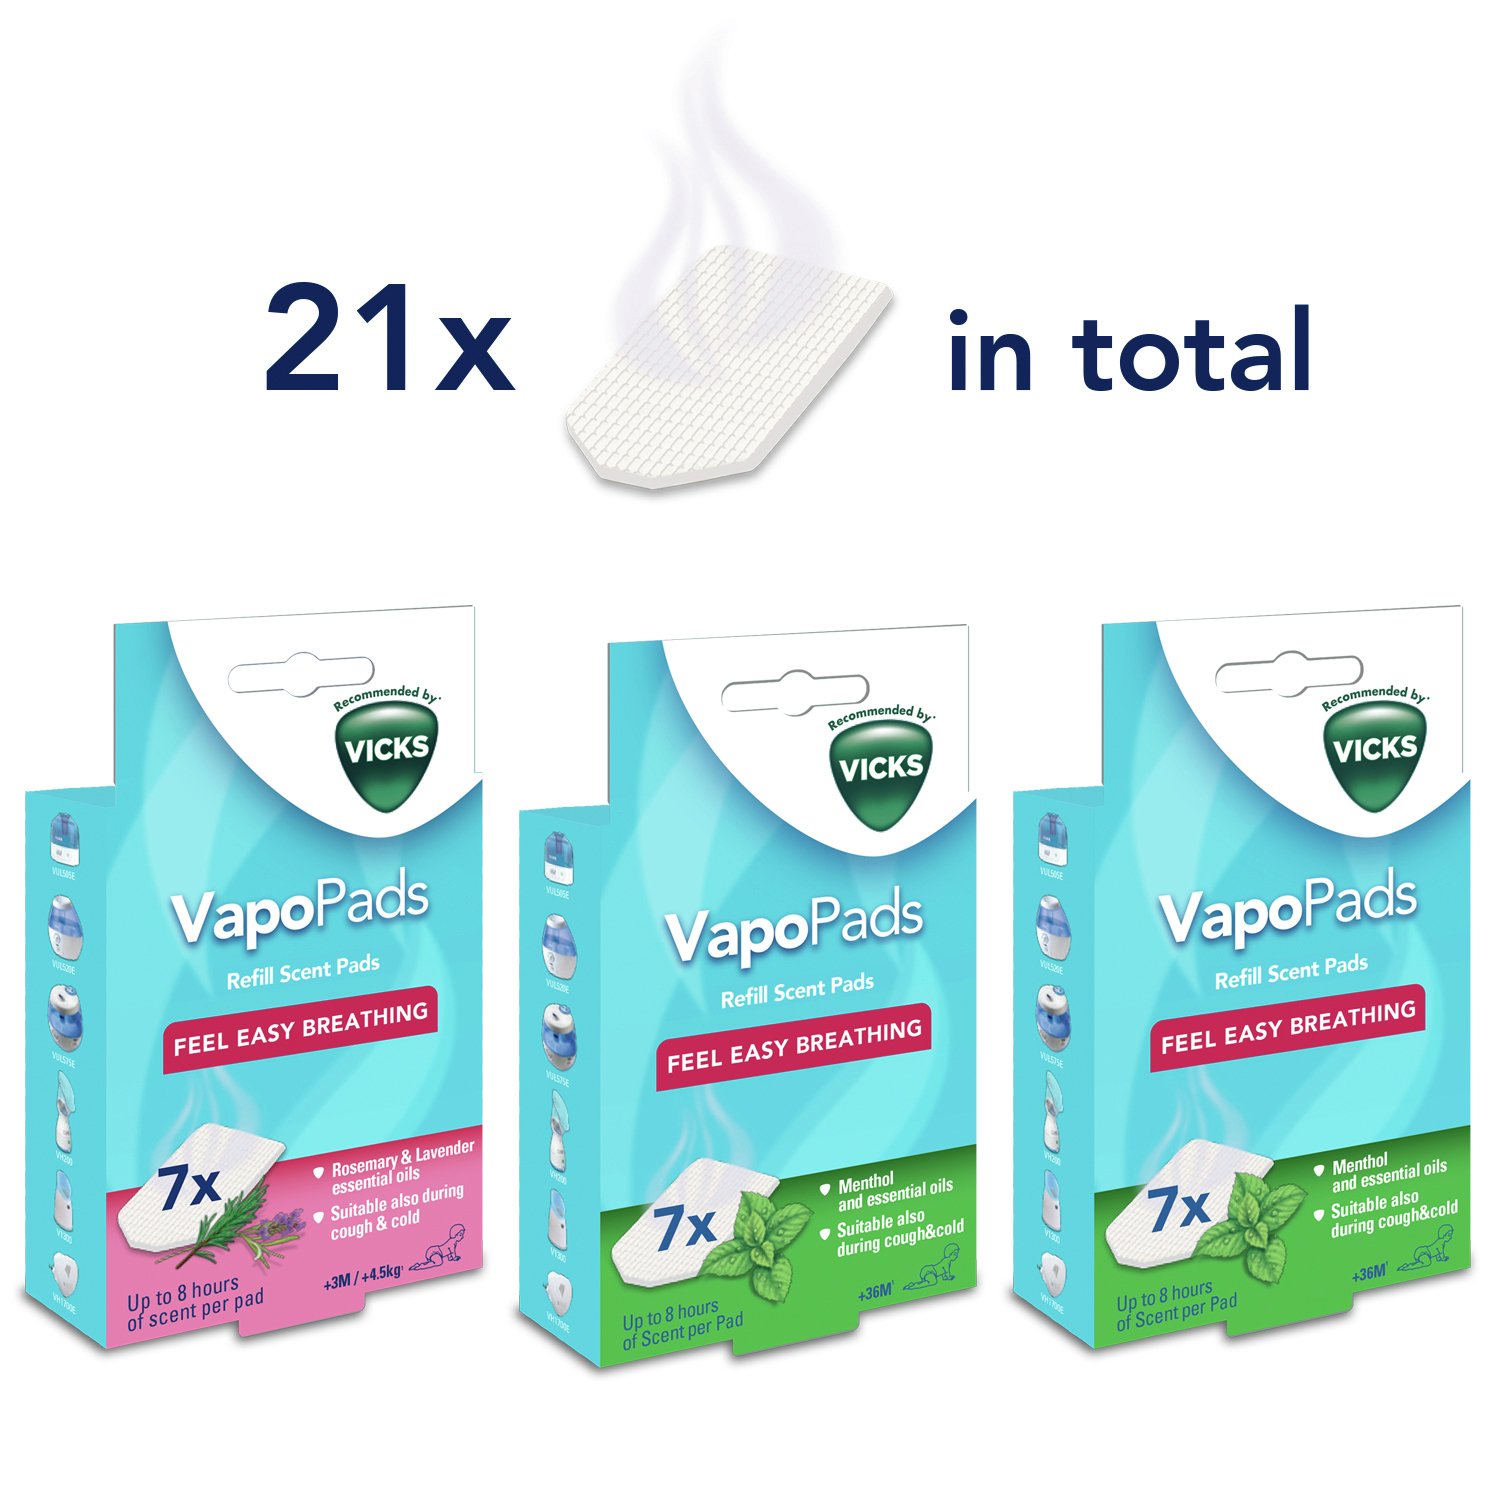 Vicks VapoPads x21 Value Pack Review